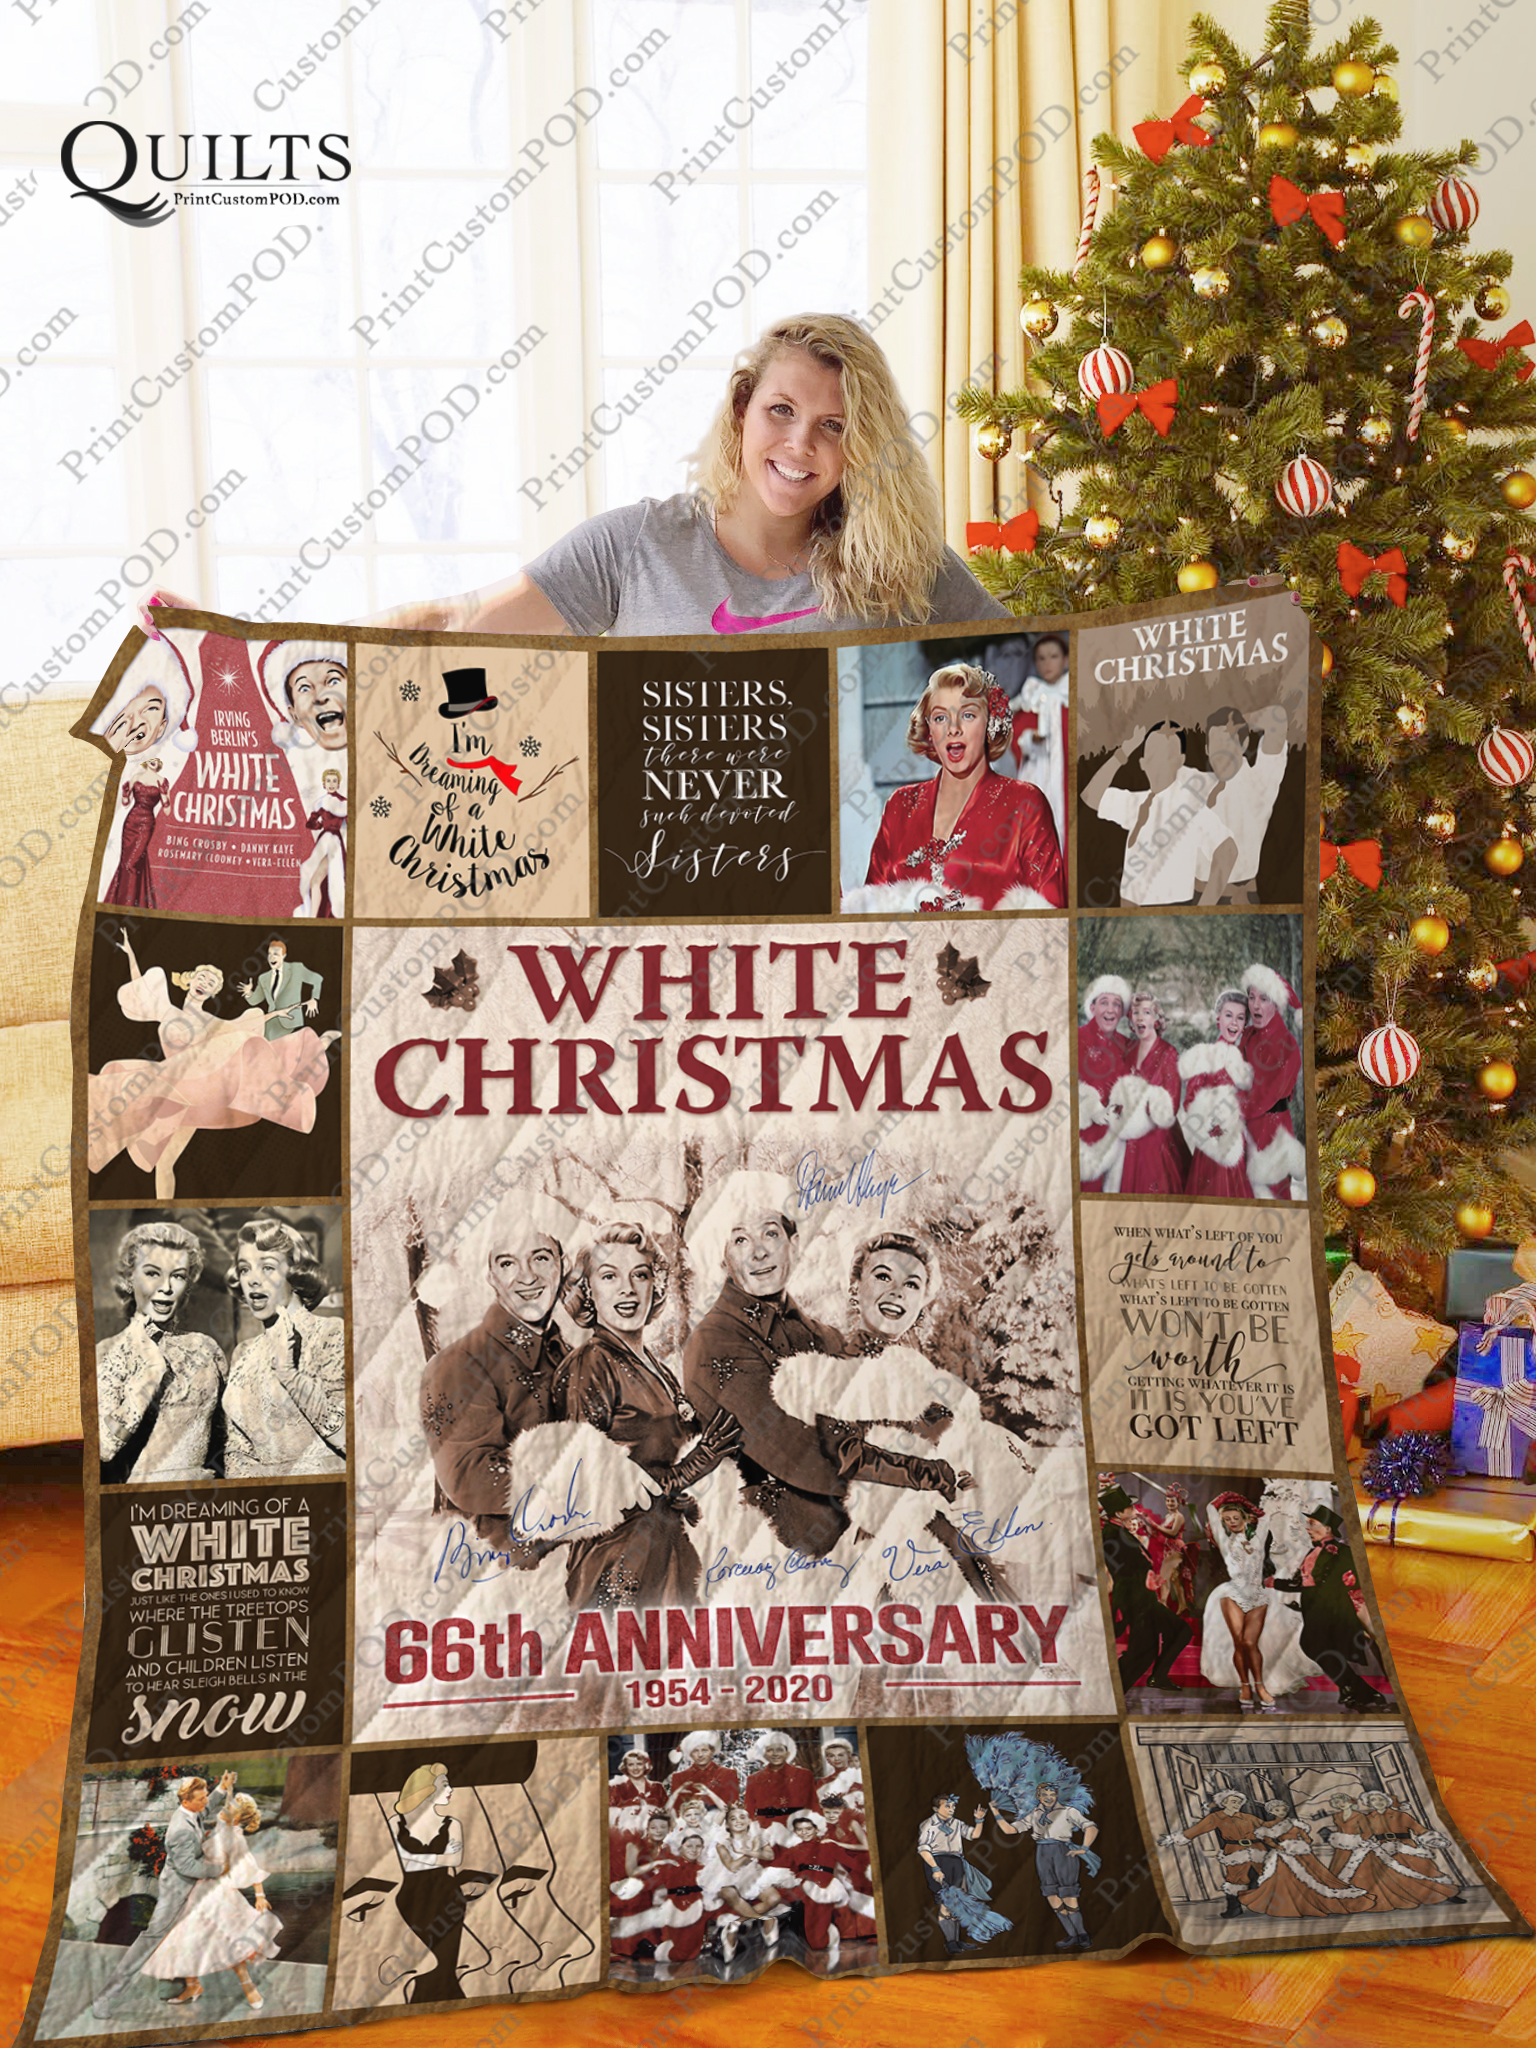 White christmas 66th anniversary quilt 2